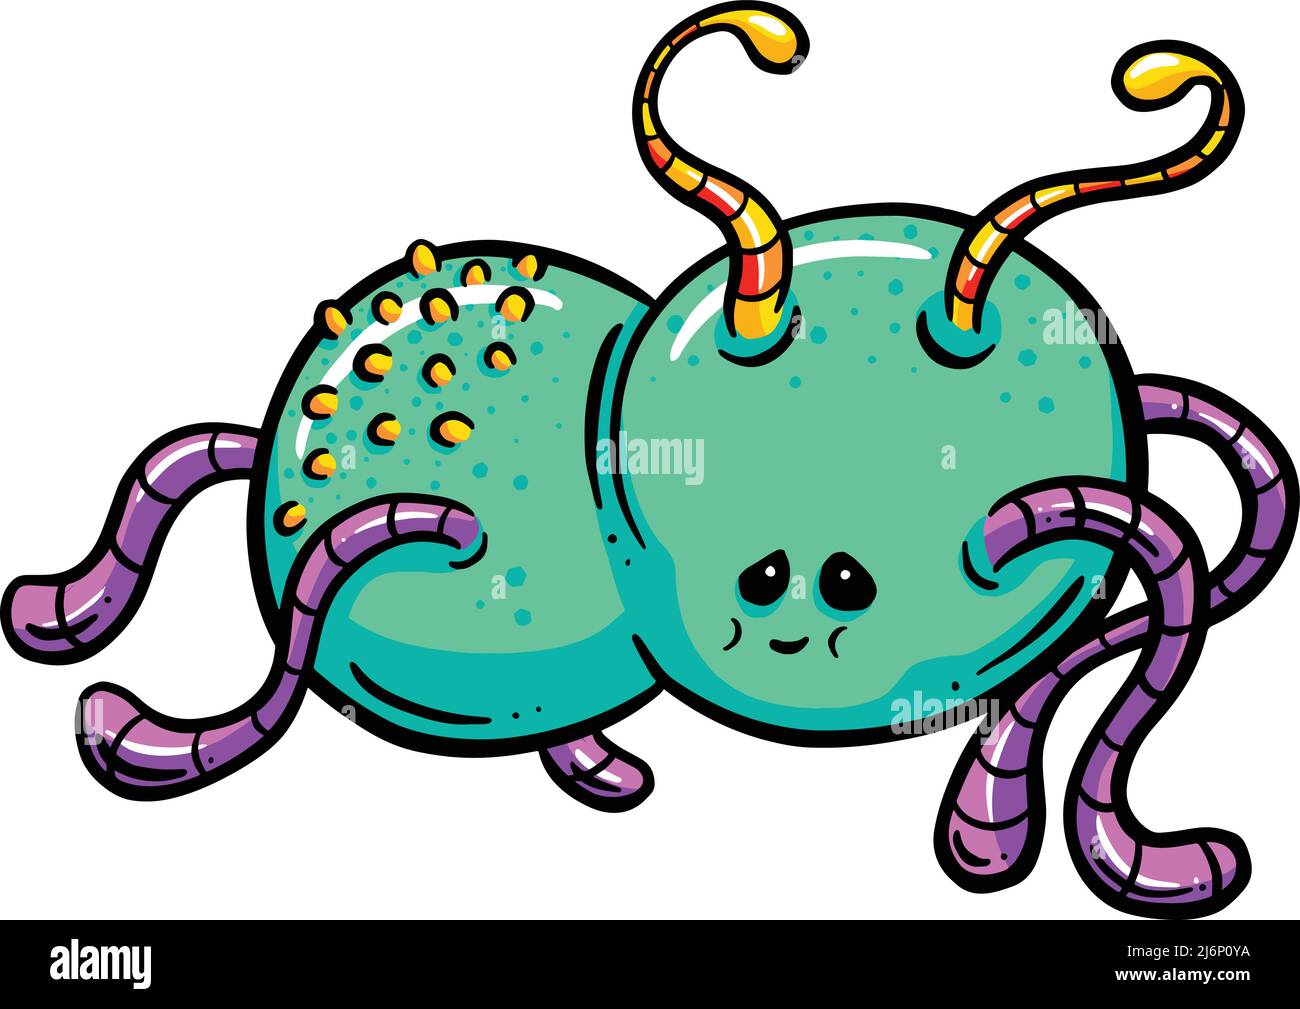 Silly Alien Monster Imaginary Character Cartoon Creature Stock Vector